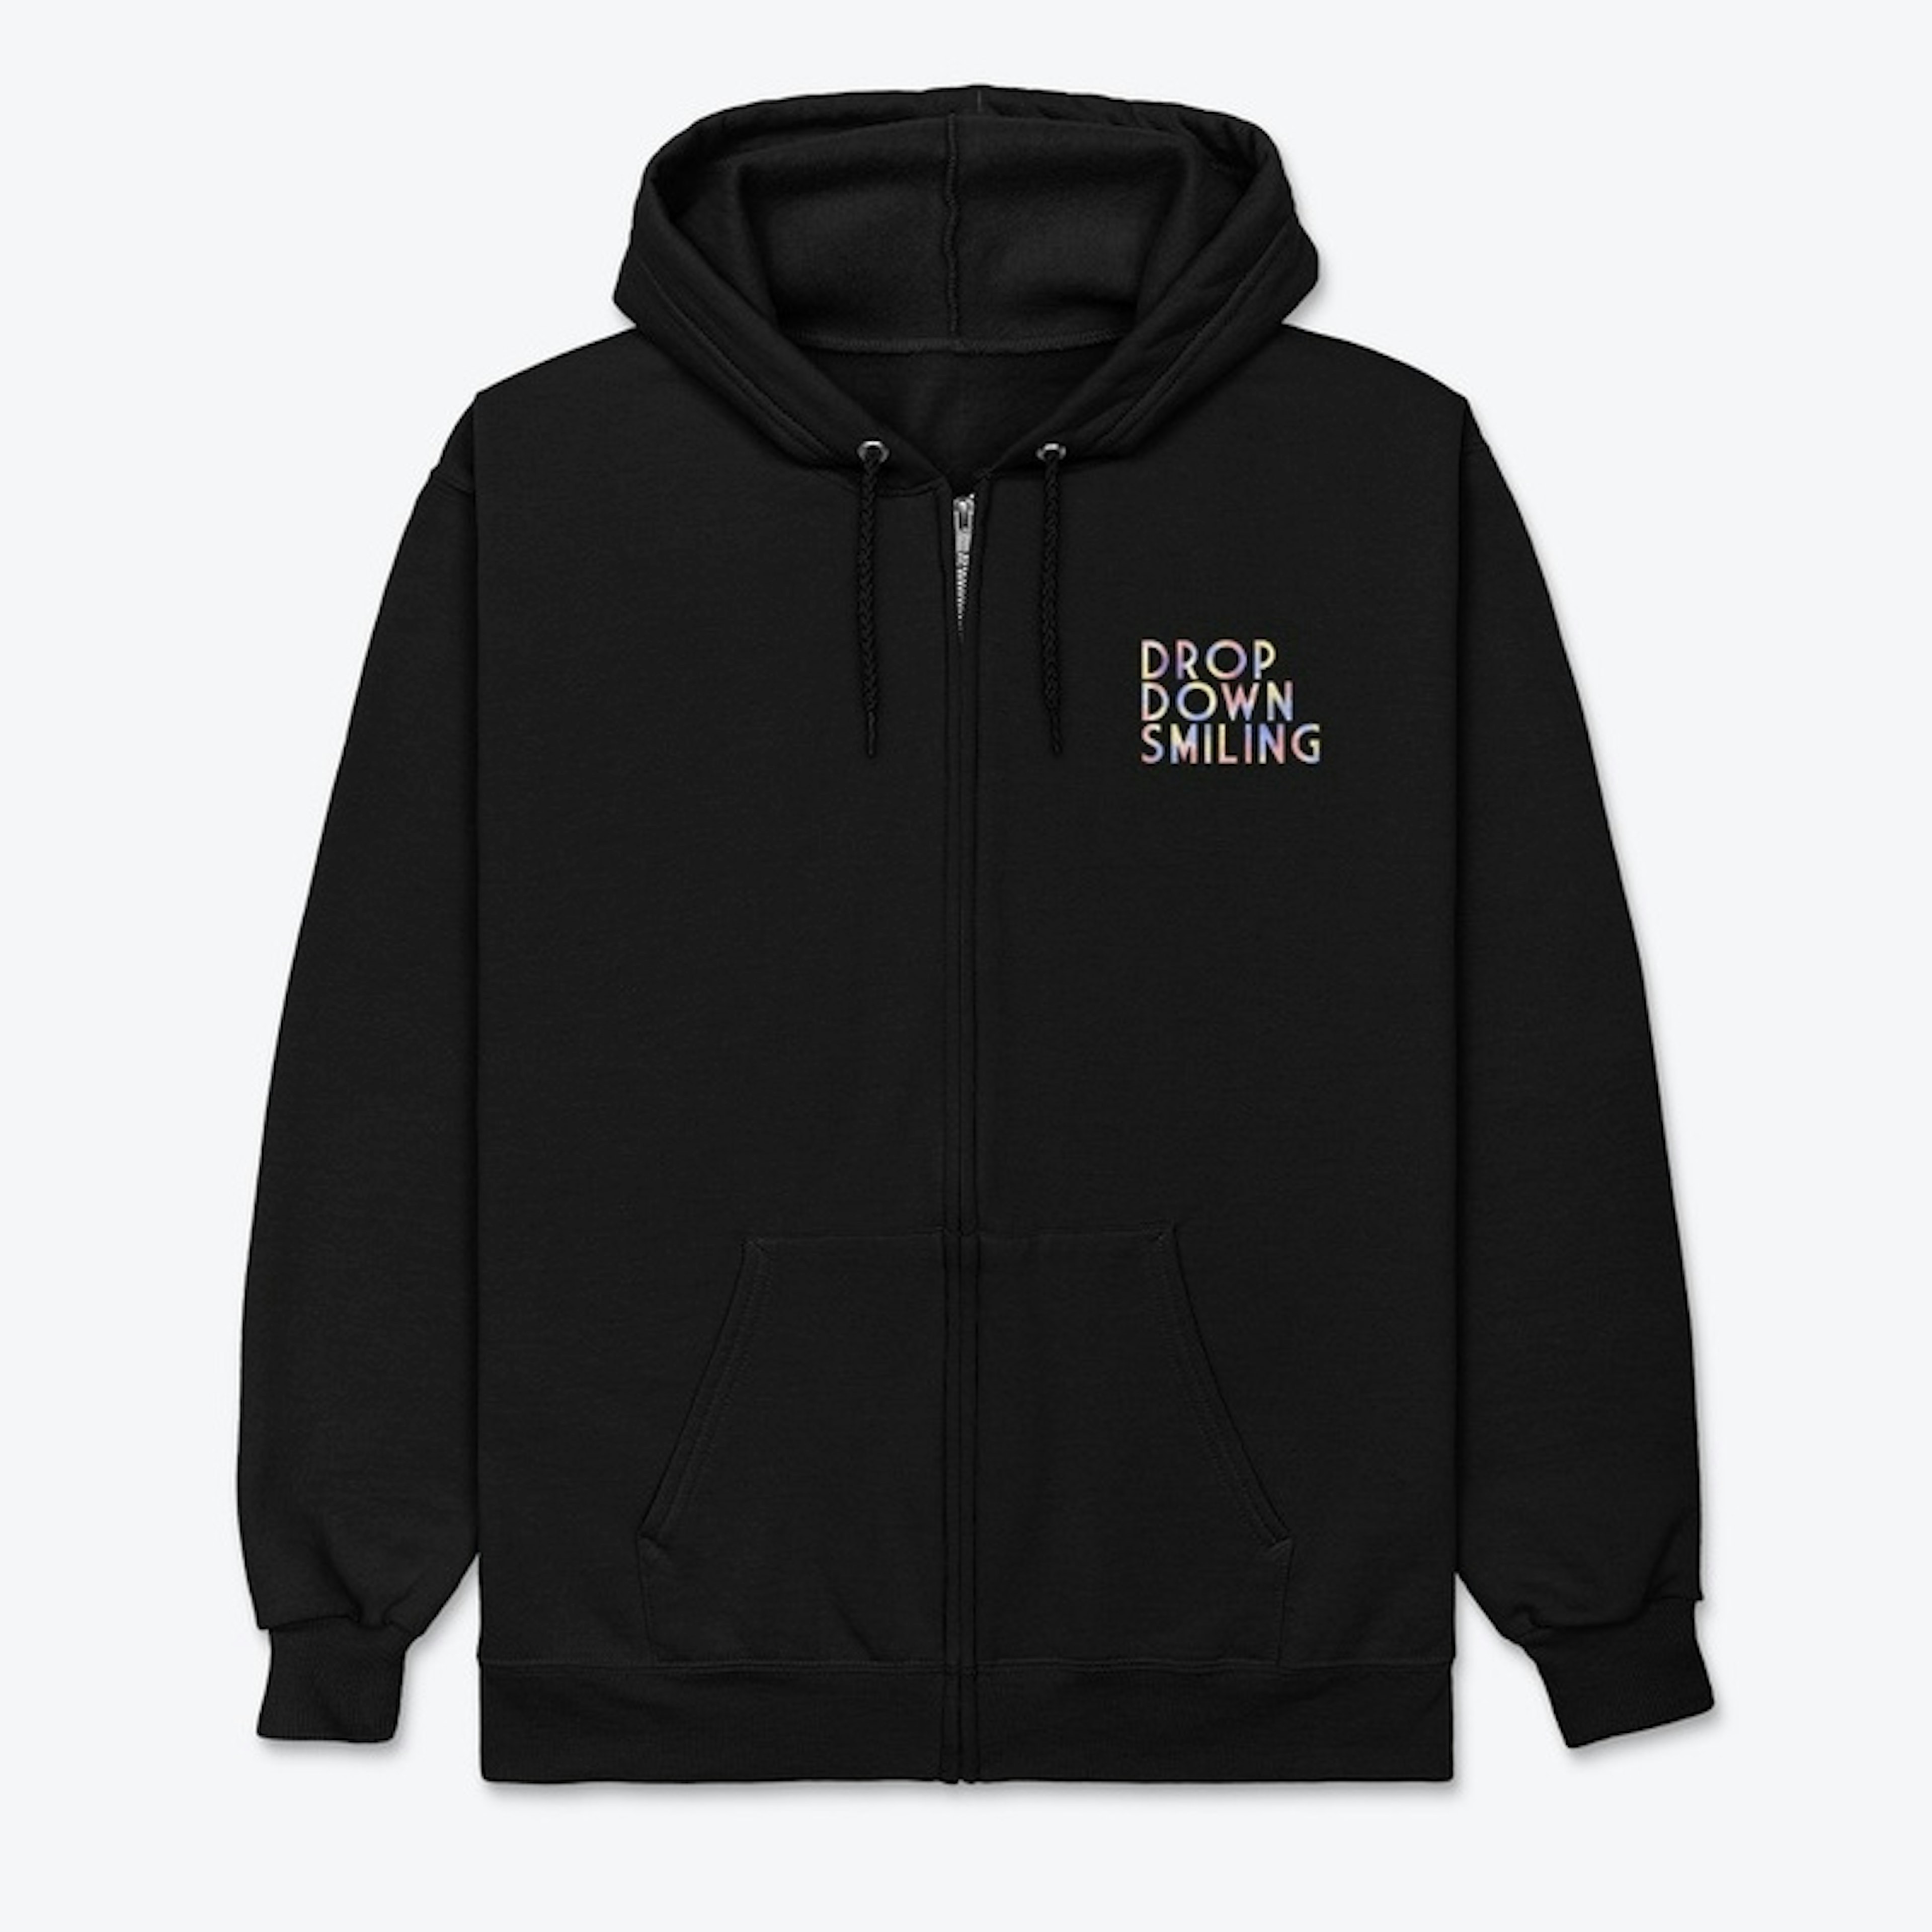 Multi-coloured Pocket hoodie